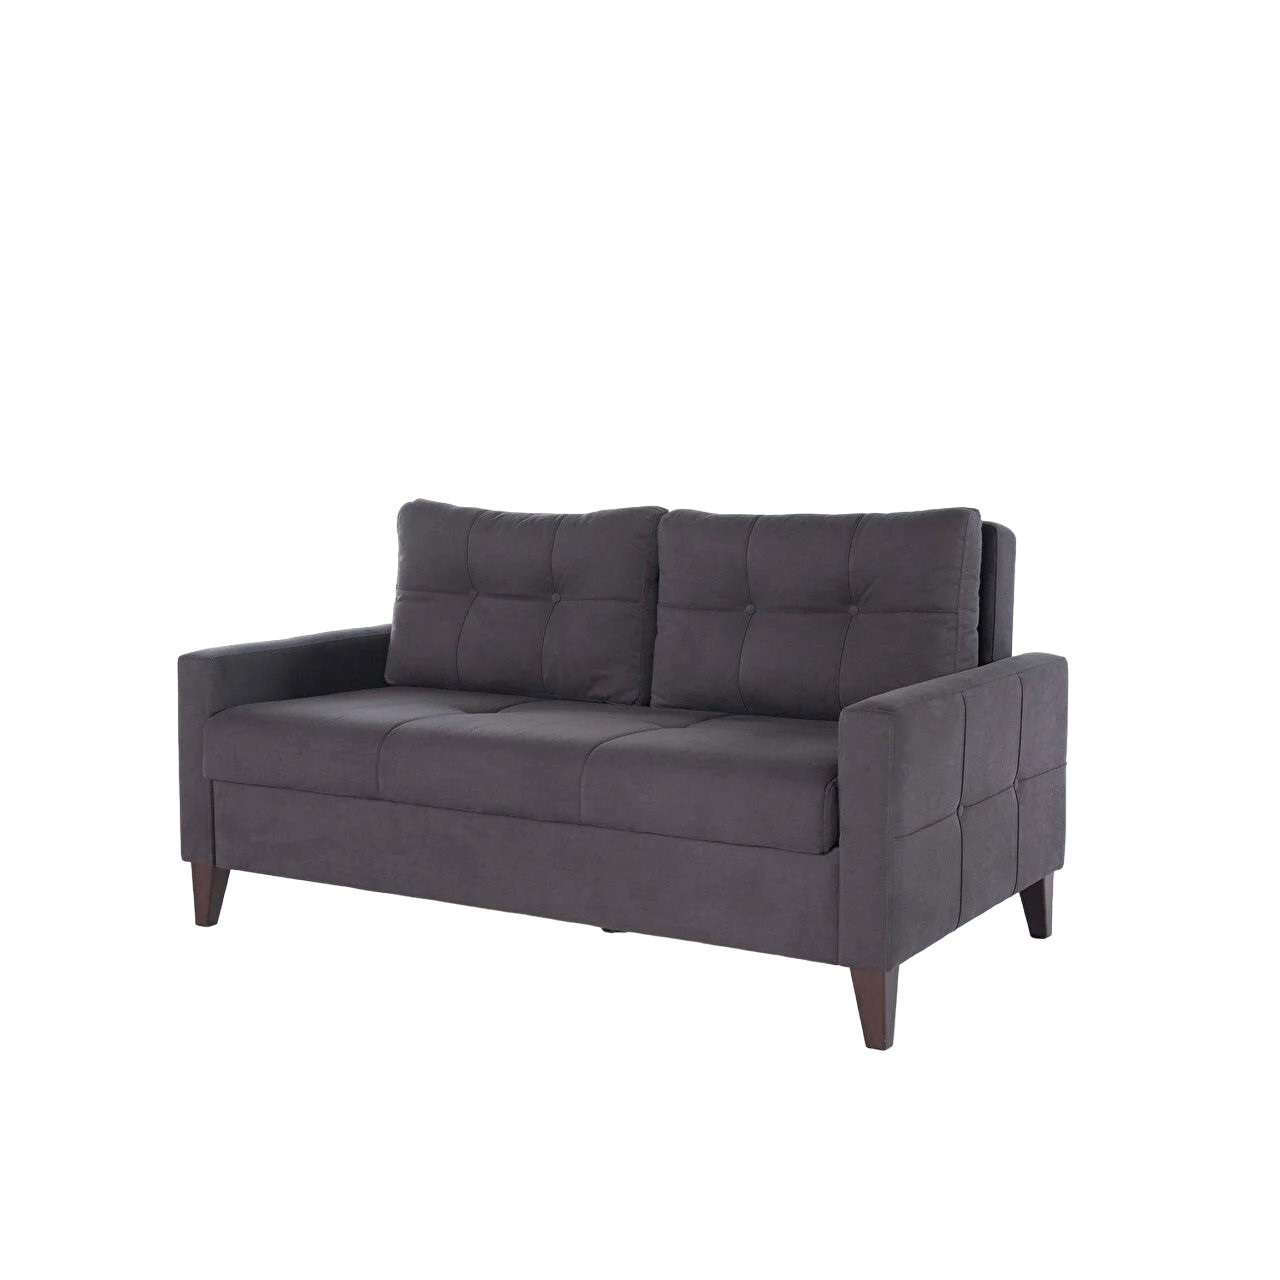 Кресло-кровать Bellona Sandro, темно-серый тк 201896, размер 161х89х83 см (SAND-02)SAND-02